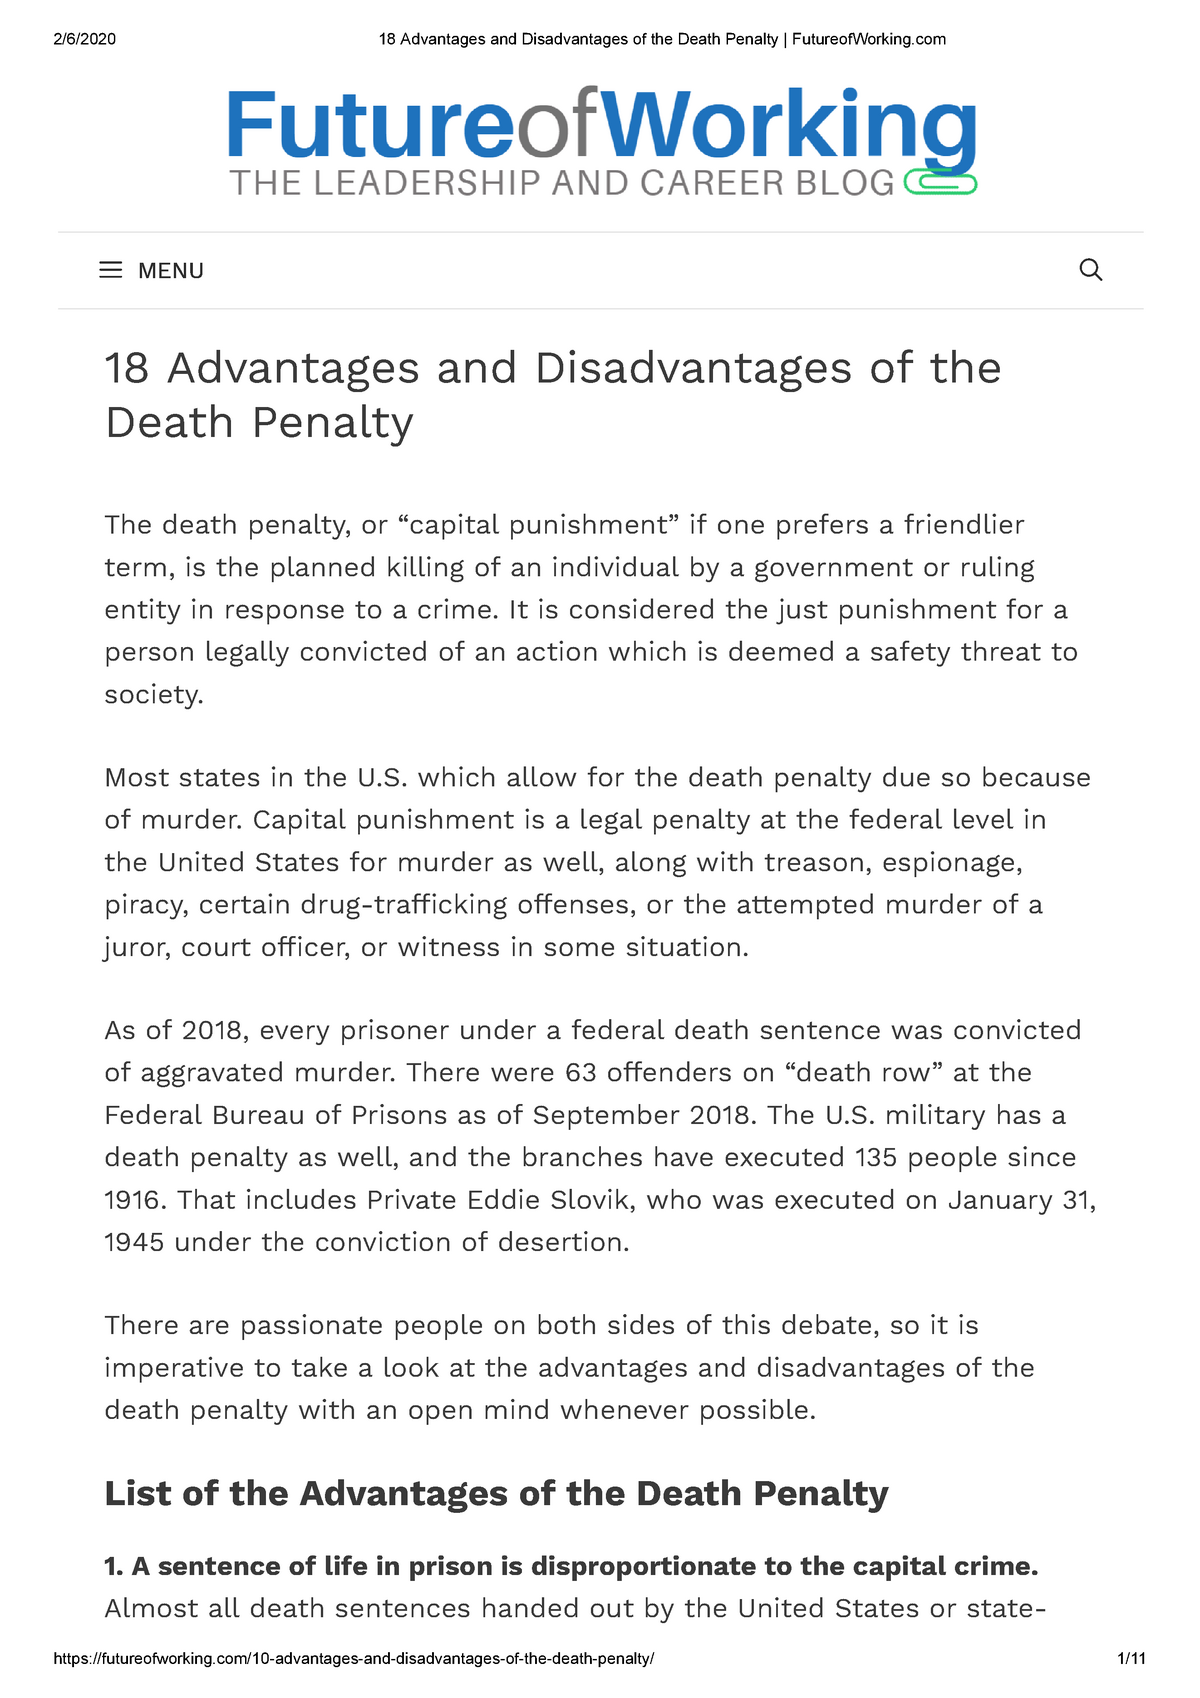 death penalty advantages essay